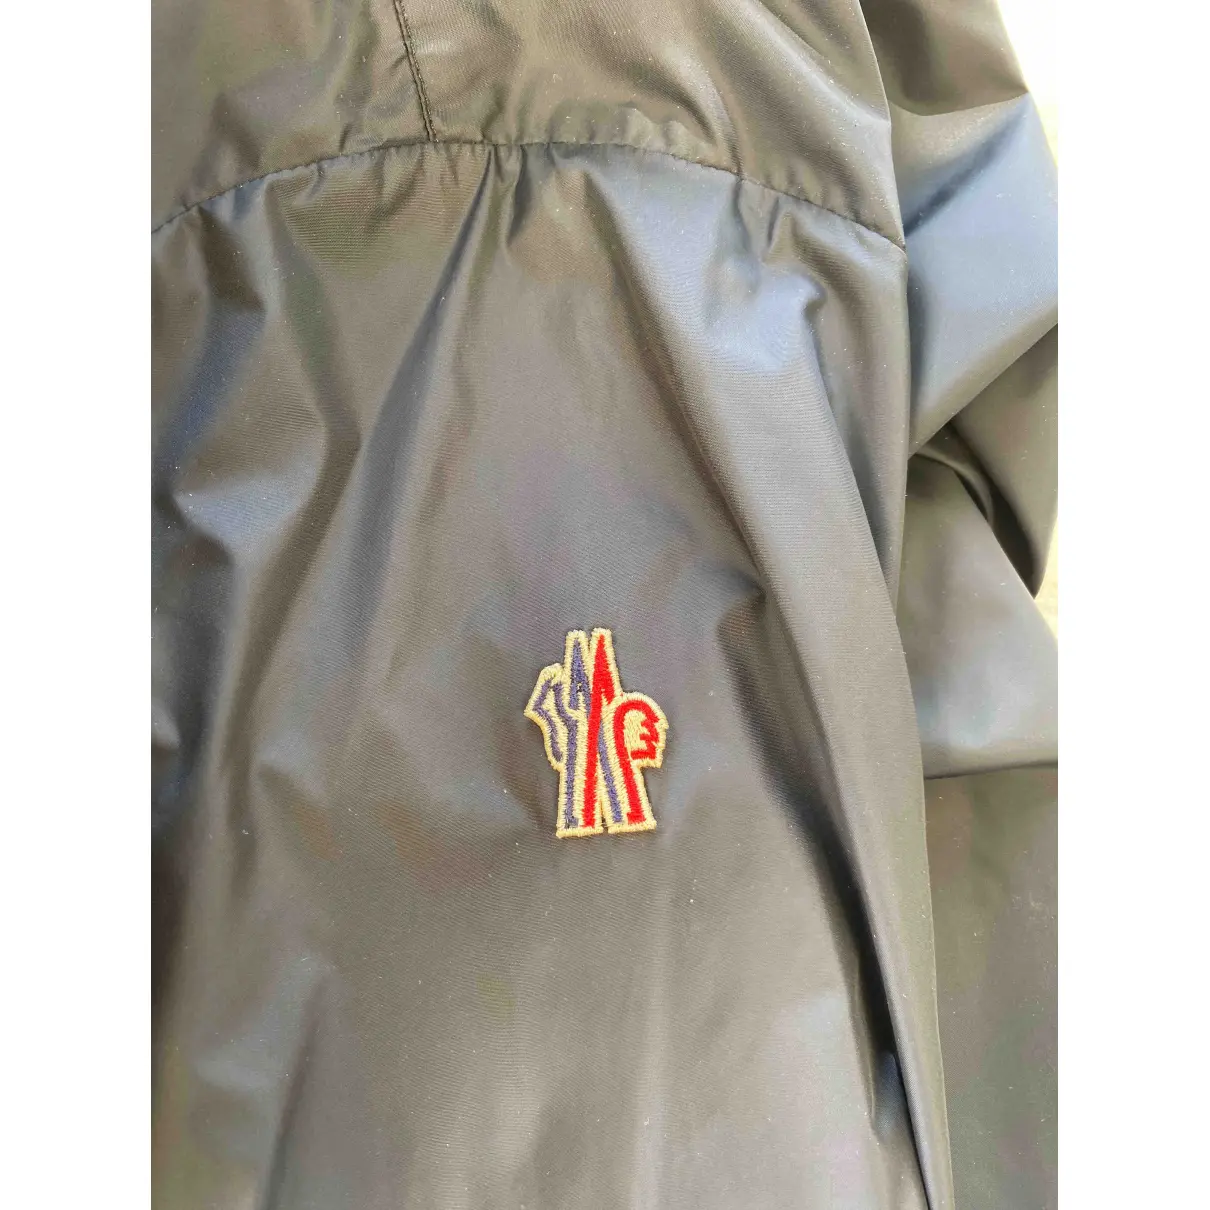 Grenoble jacket Moncler